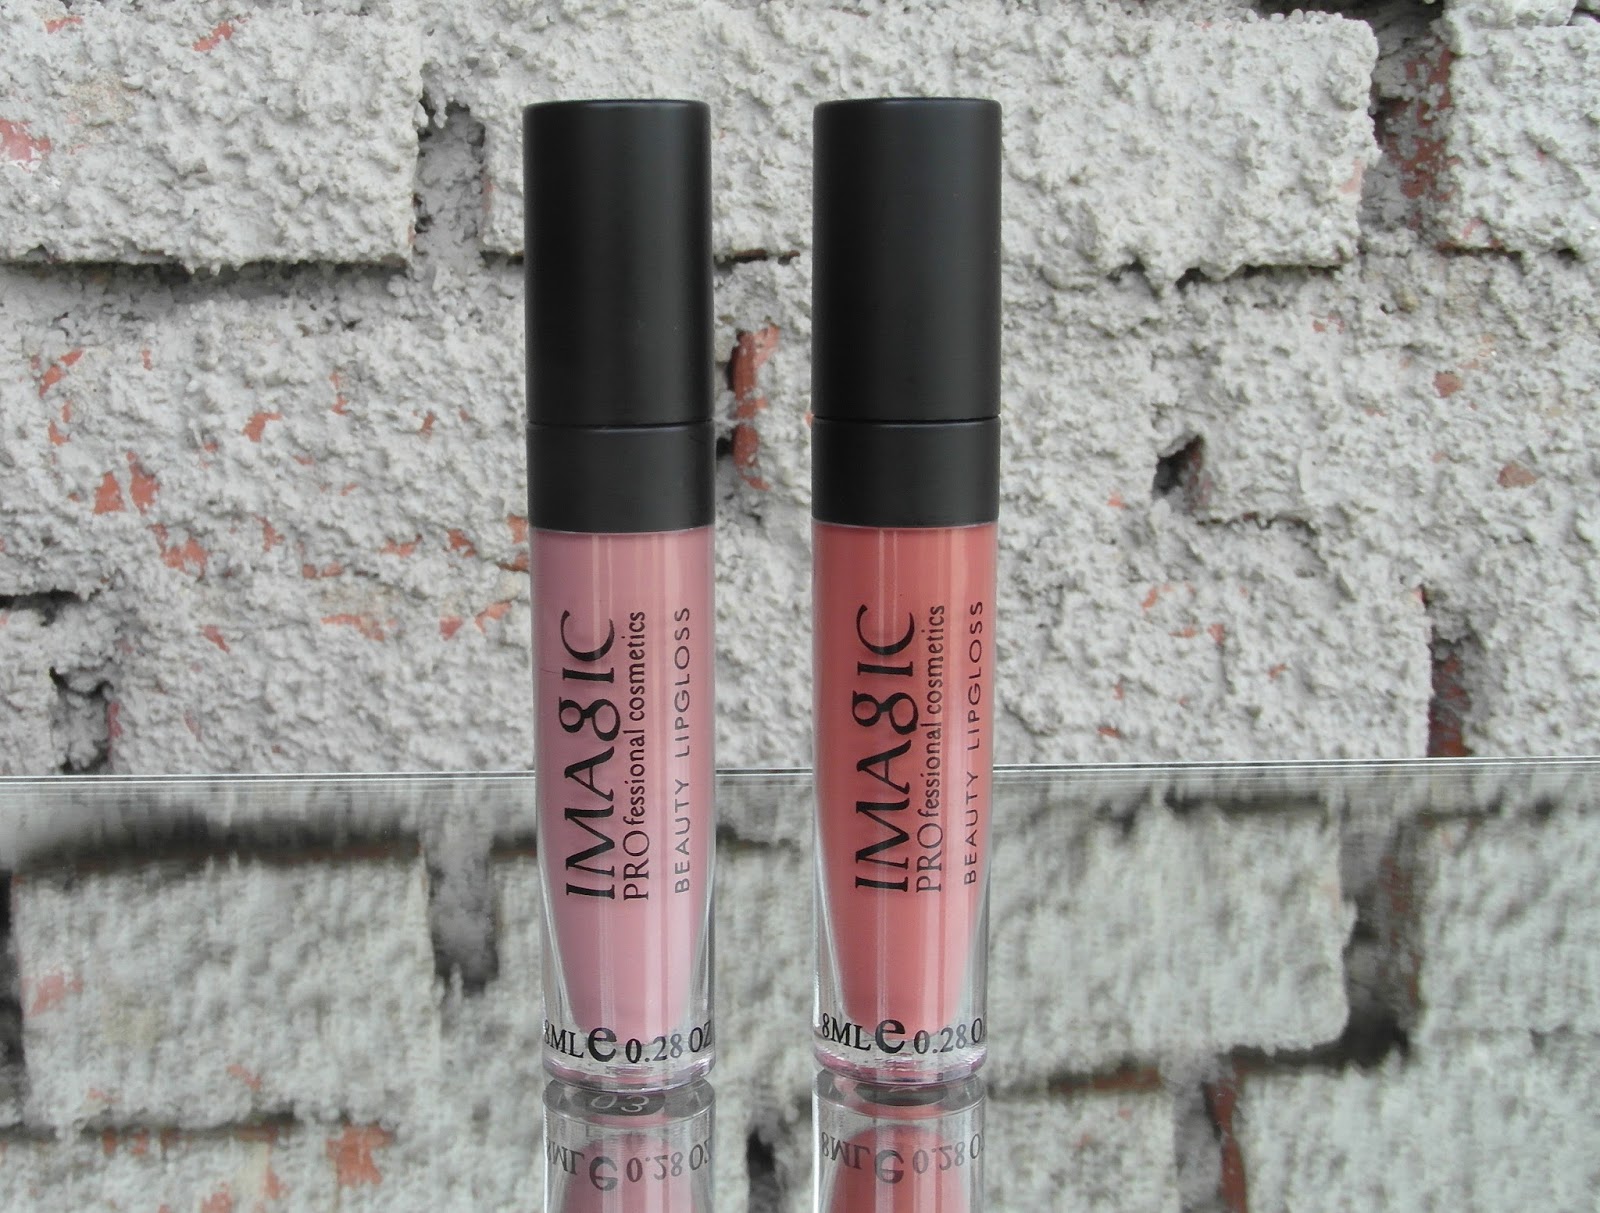 IMAGIC liquid lipstick in the shades 03 & 04!